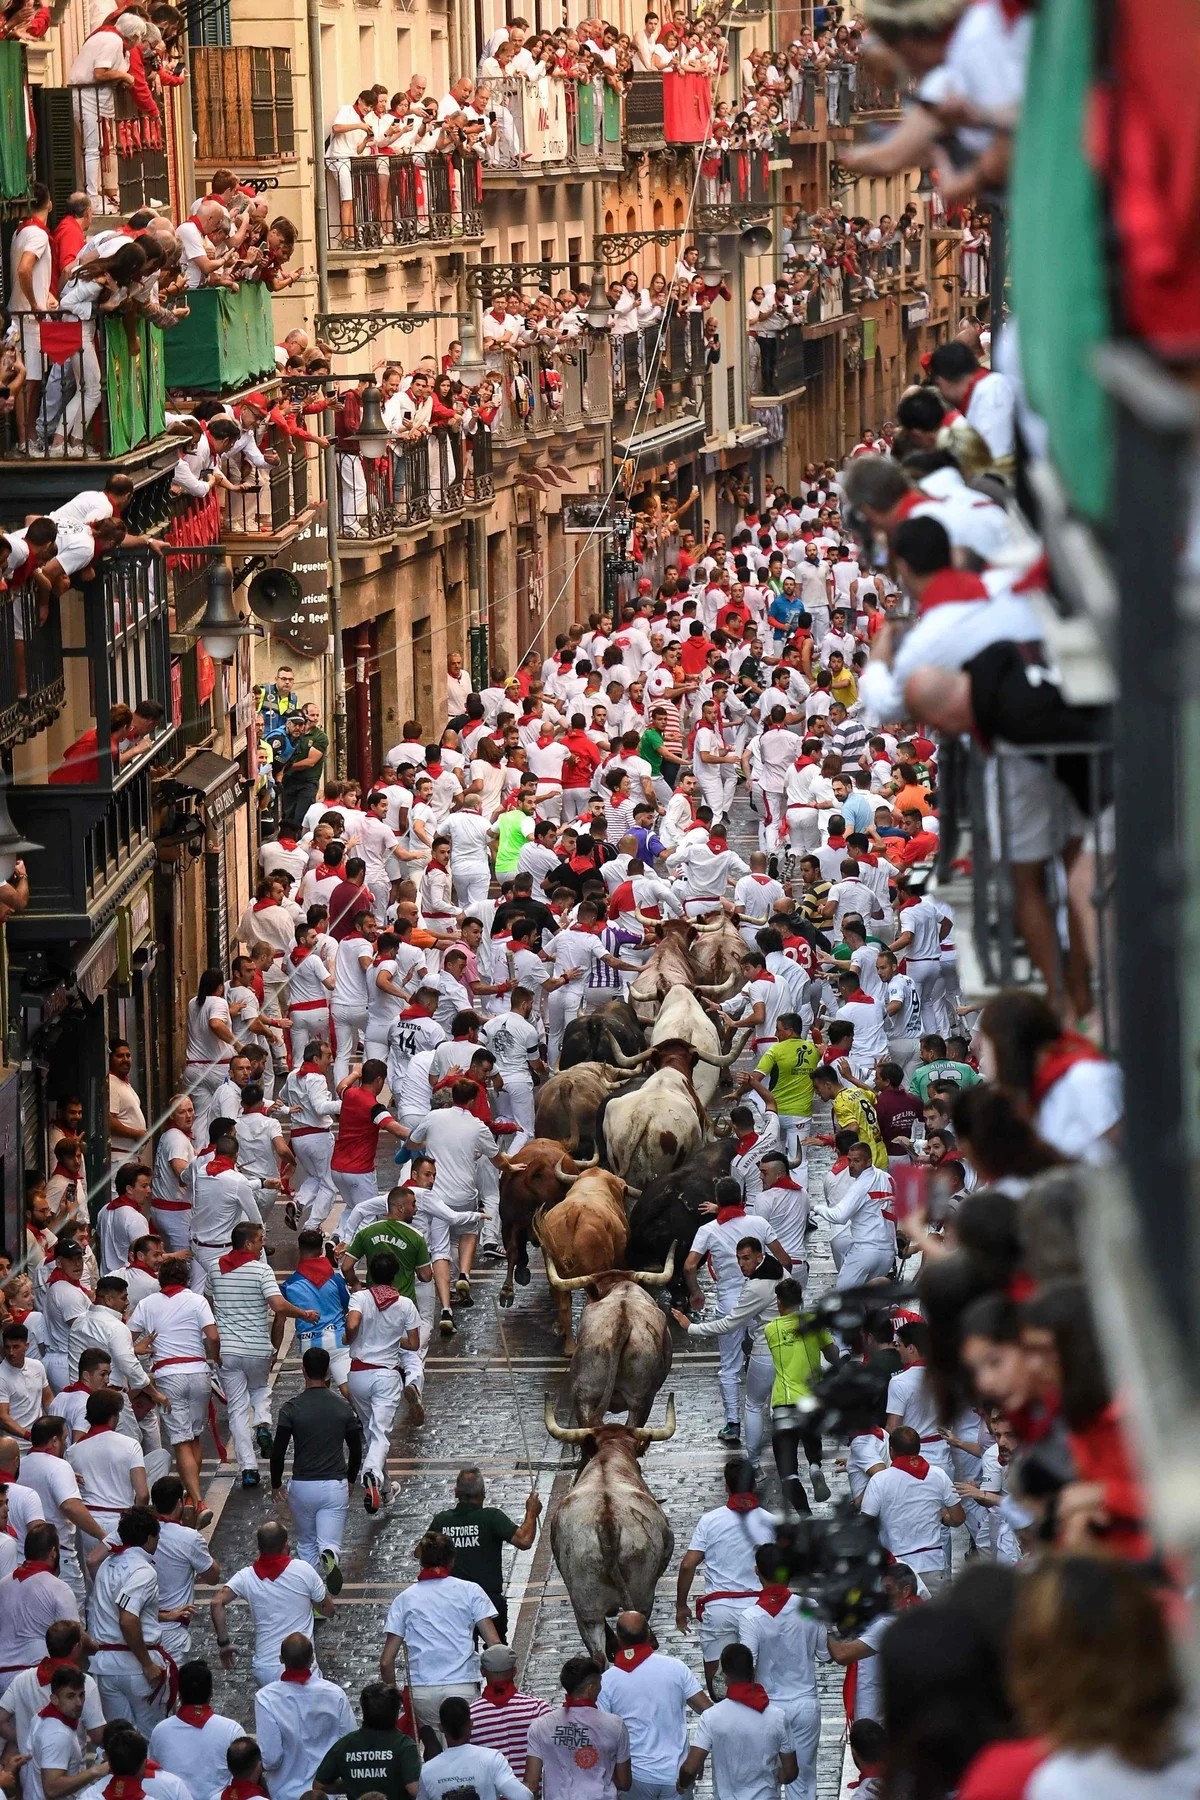 Пробег с быками на фестивале Сан-Фермин в Памплоне